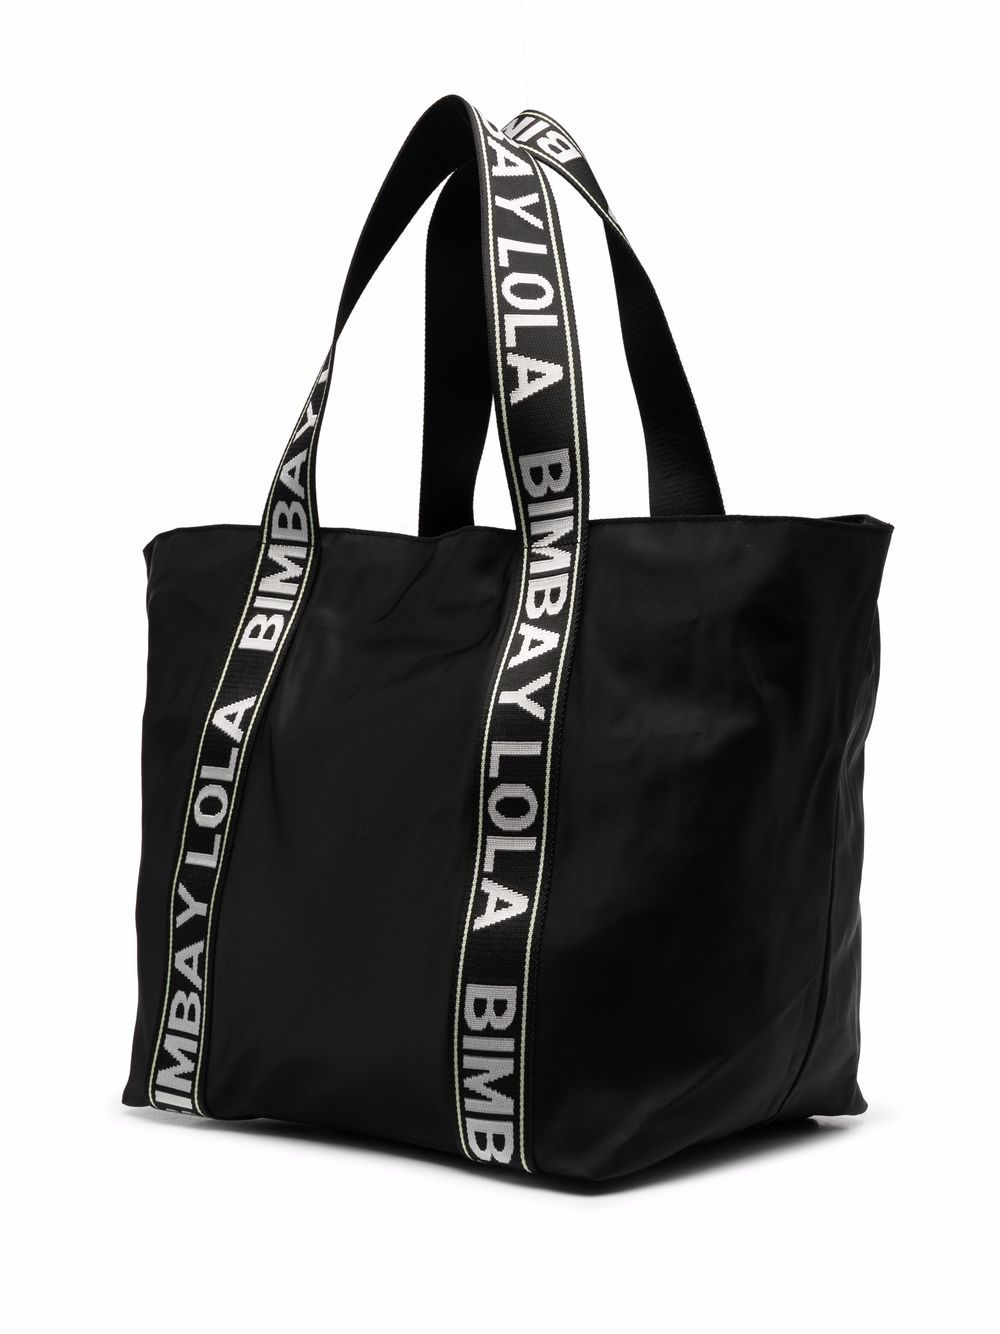 BIMBA Y LOLA Women's Sling 2in1 / Fashion Bag Tote Import